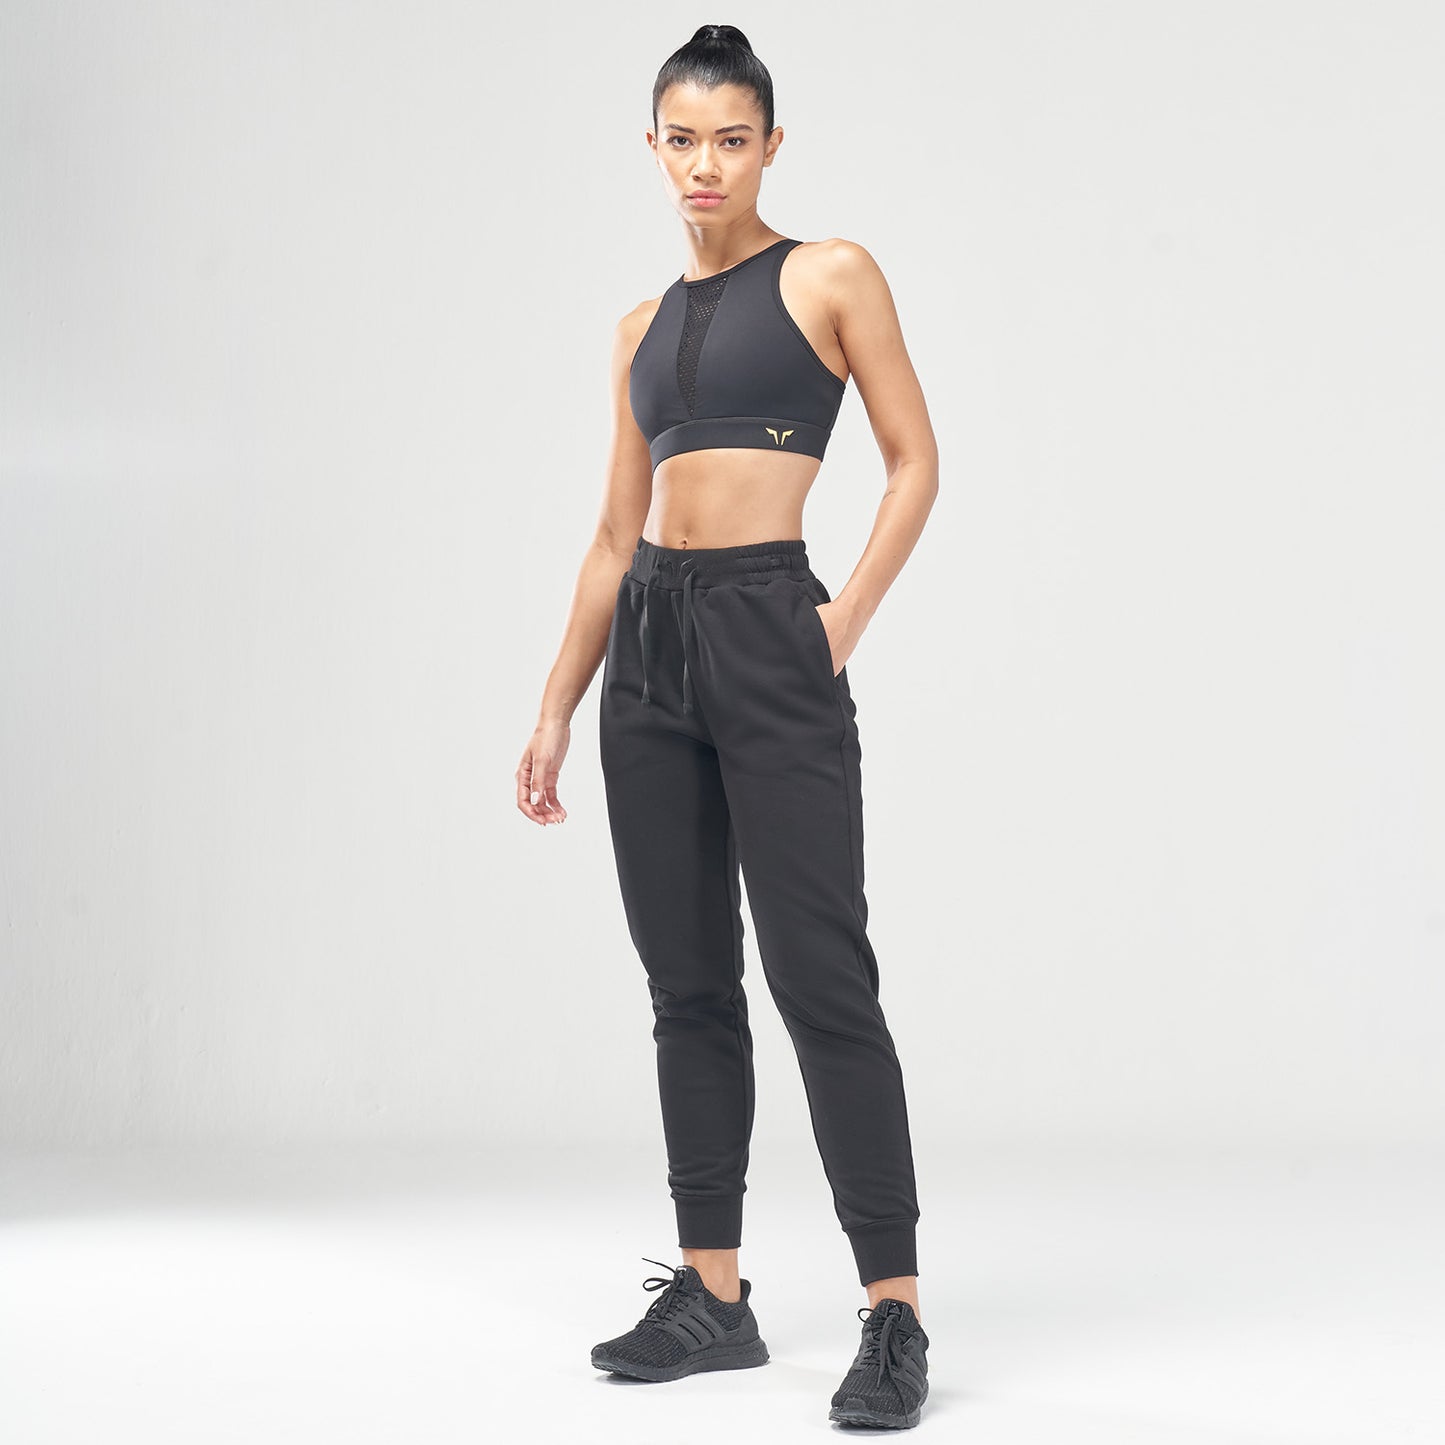 squatwolf-workout-clothes-code-high-neck-adjustable-bra-black-sports-bra-for-gym